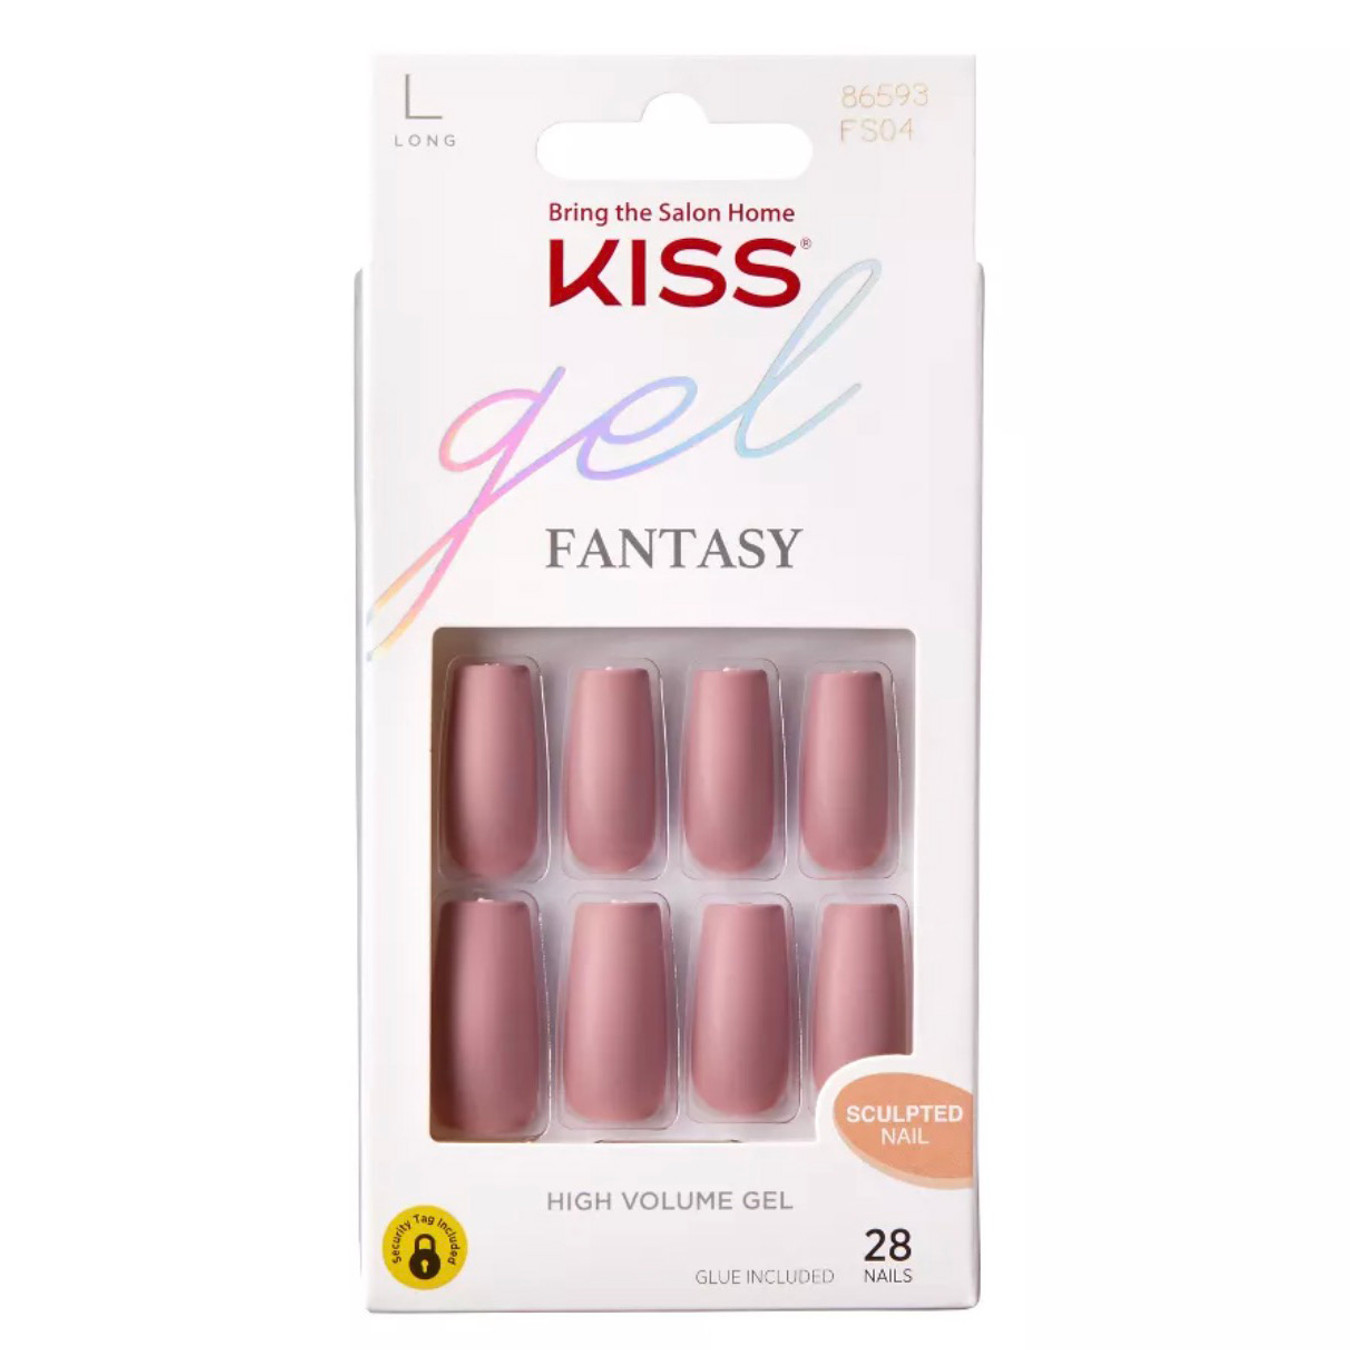 KISS Gel Fantasy Sculpted Nails - Looking Fabulous